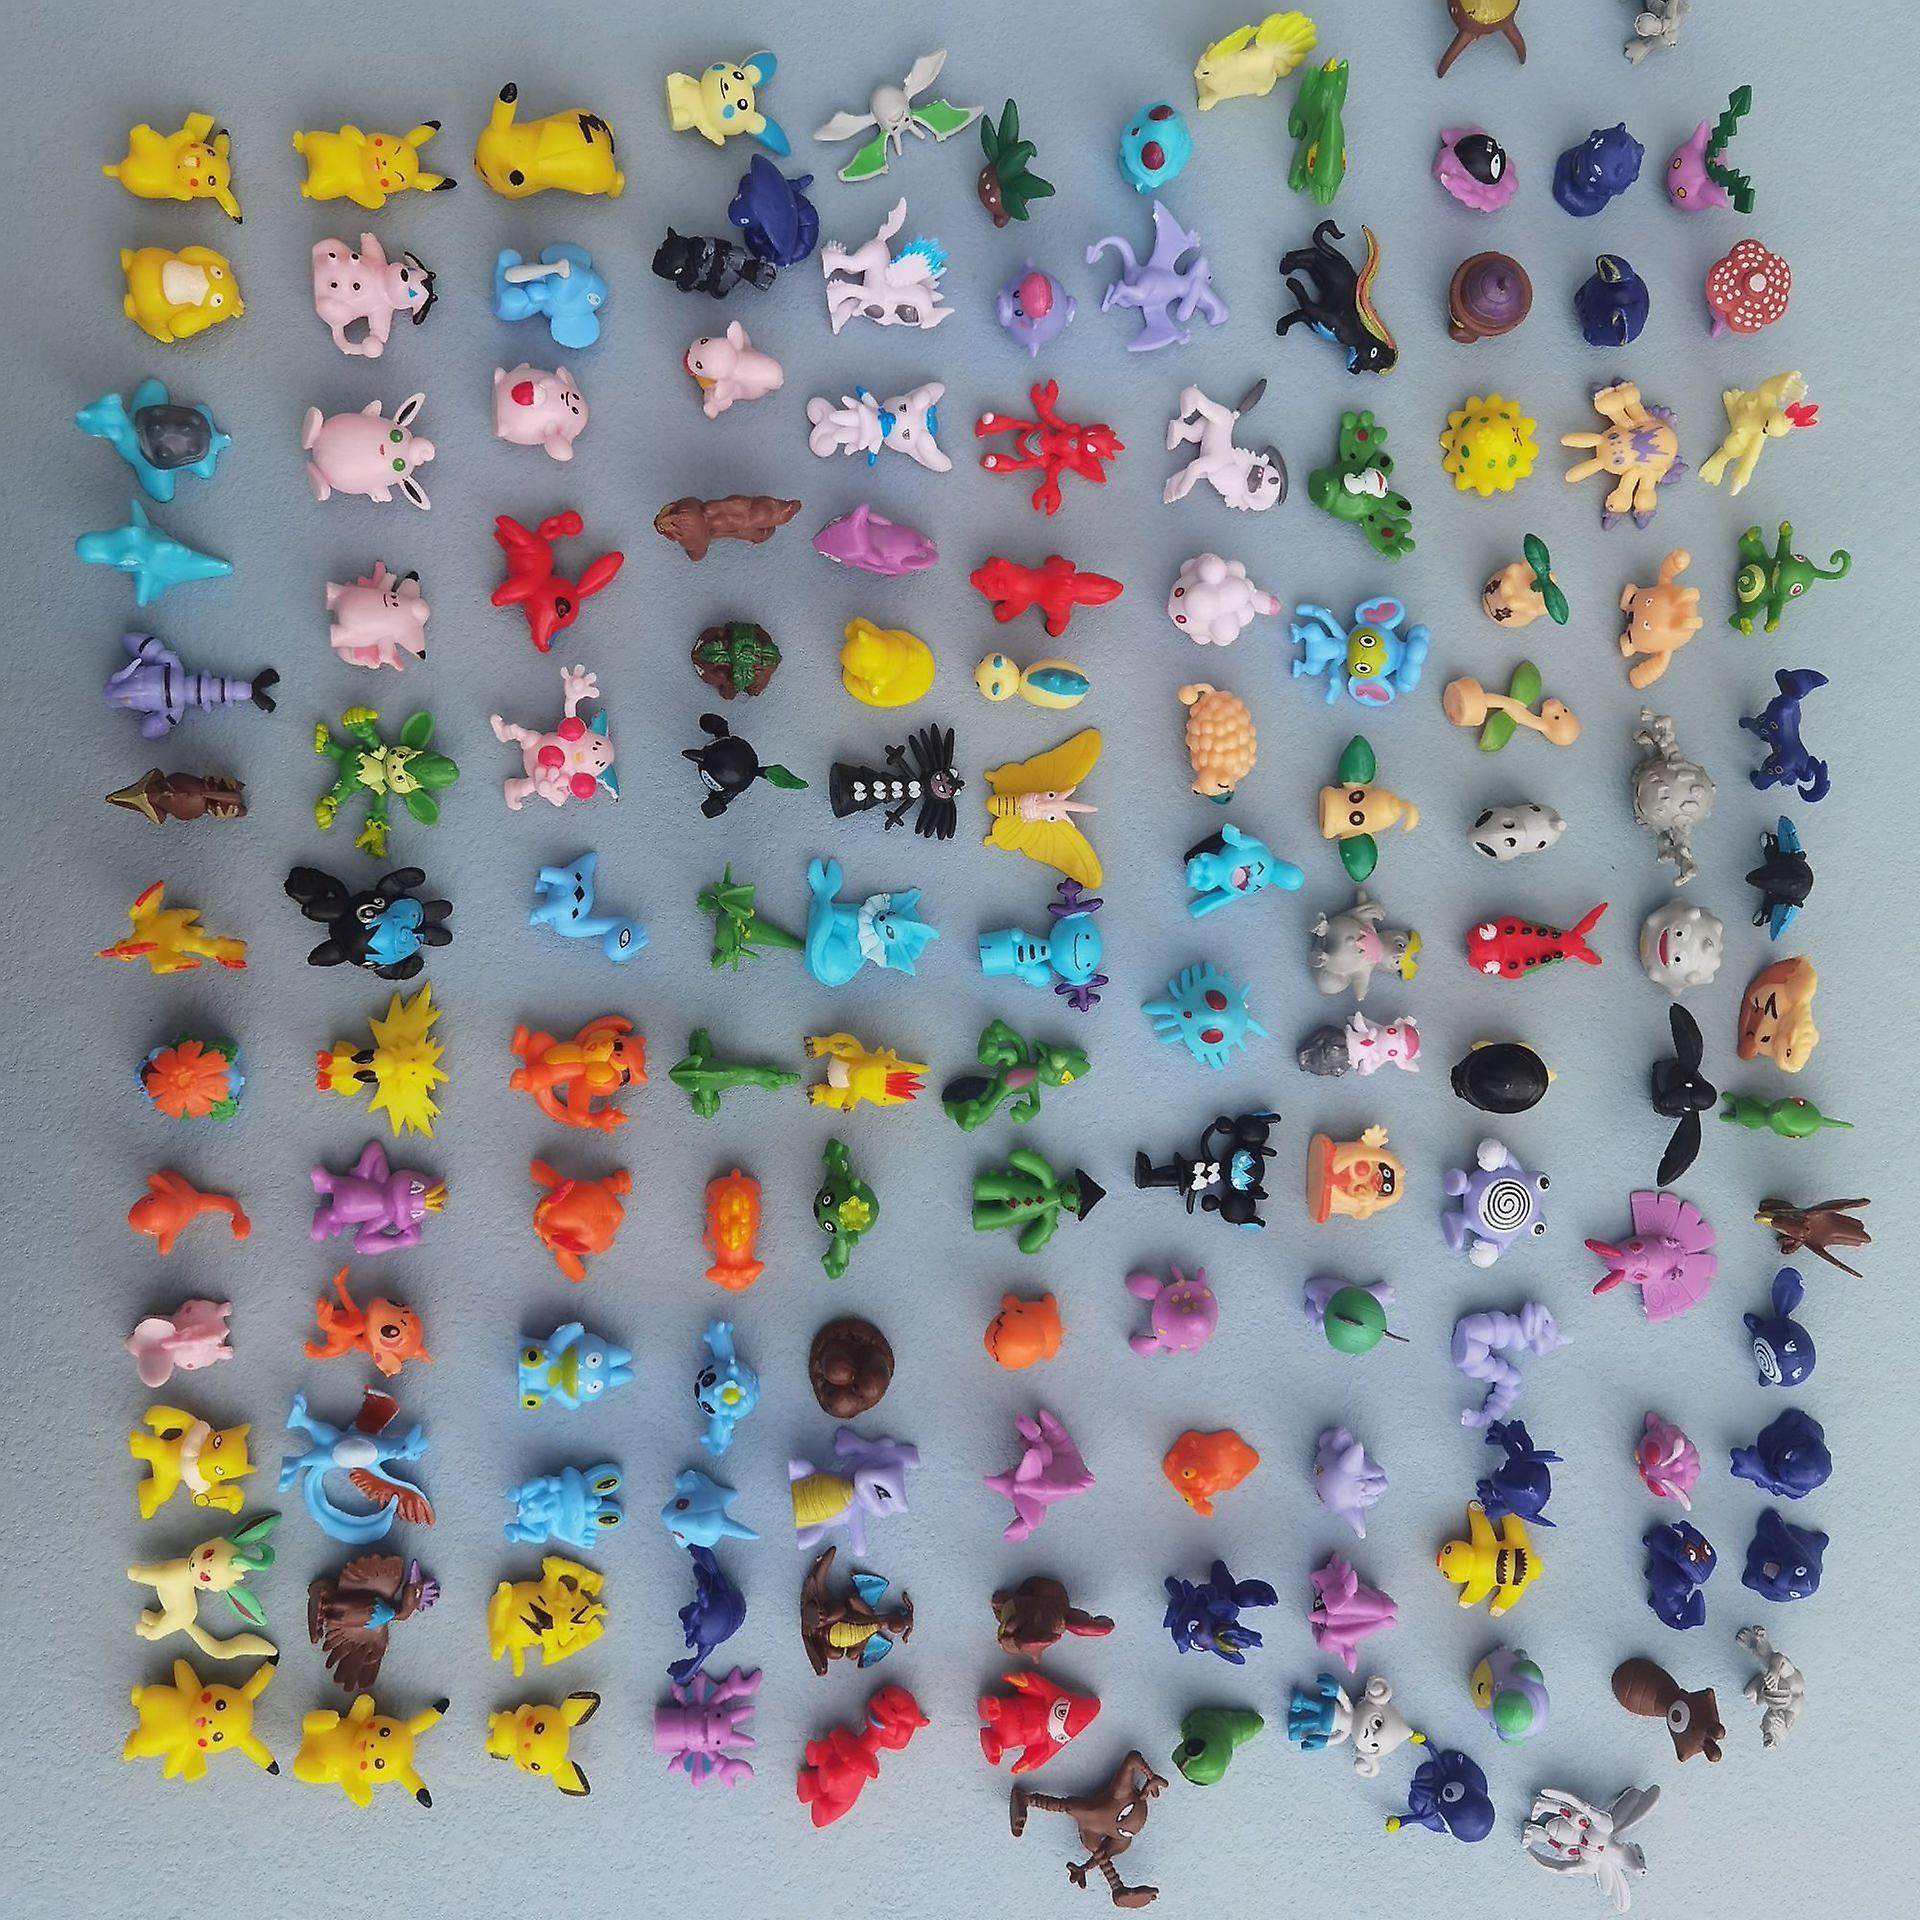 144 pcs no repeat Pokemon Action Figure toys Mini figures Model Toys 2-4cm